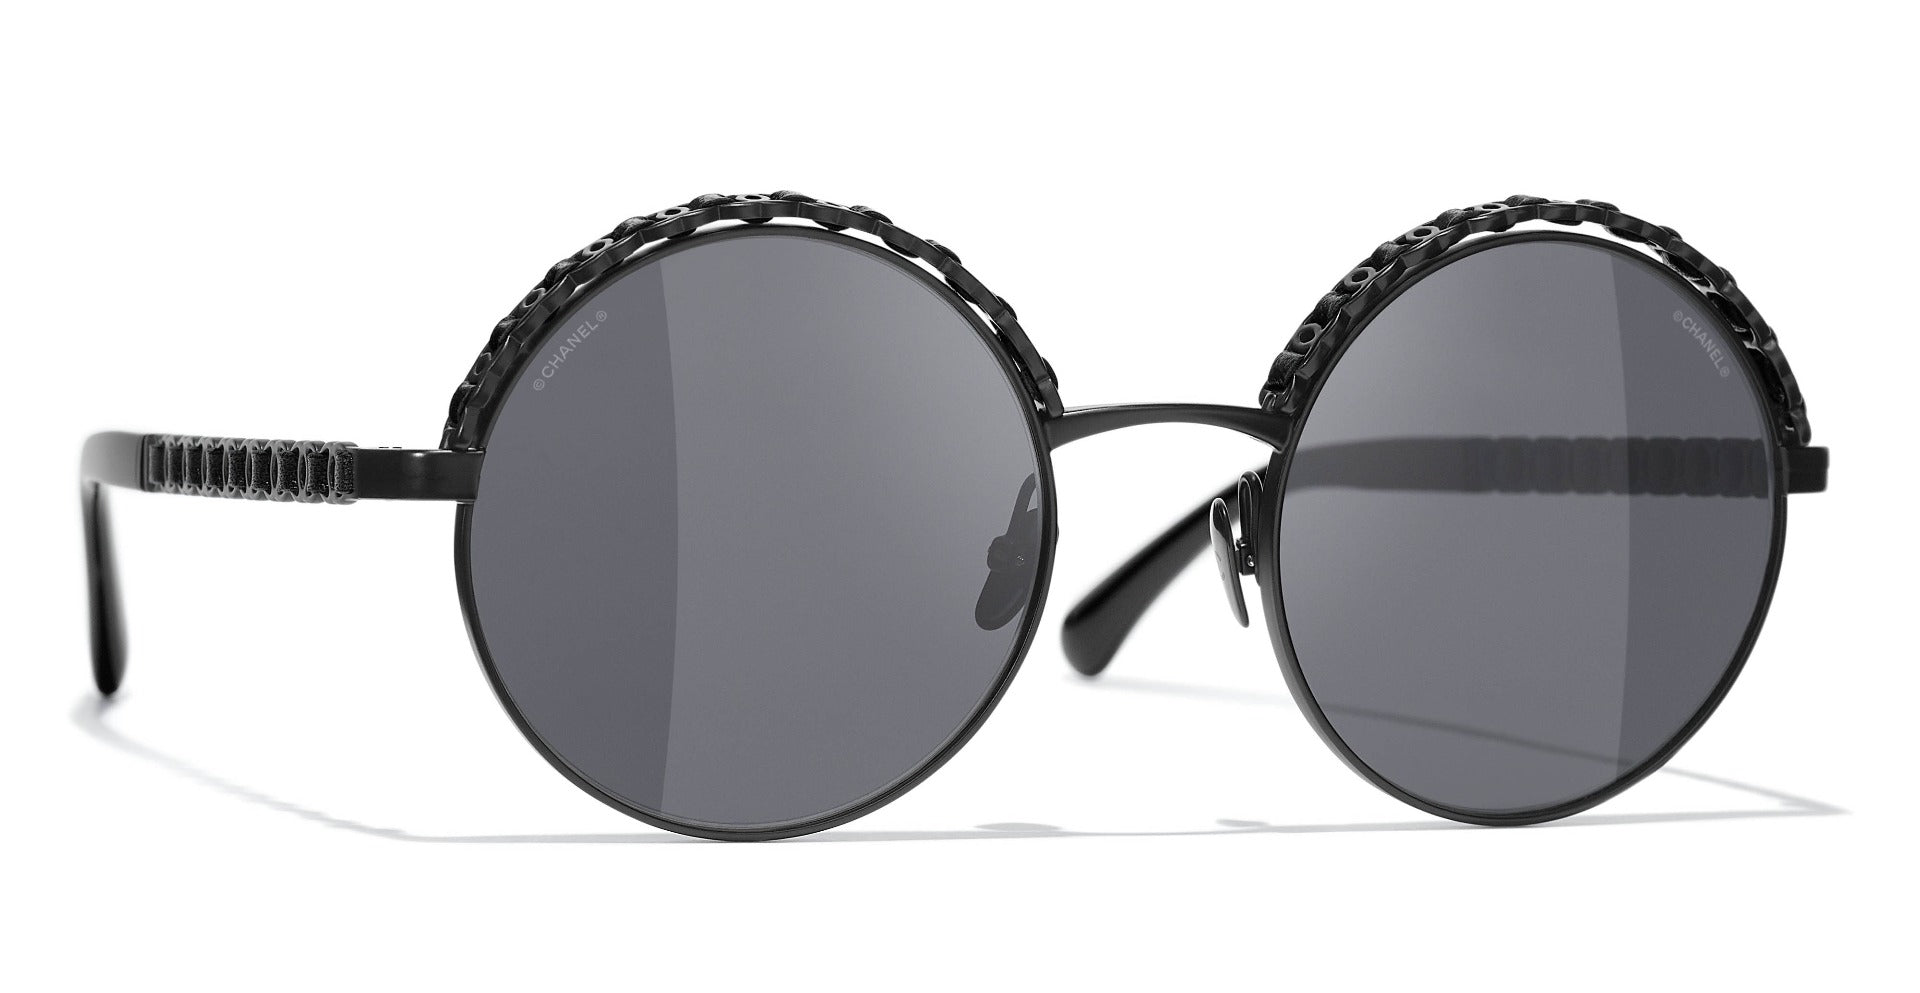 Round Sunglasses - Sunglasses